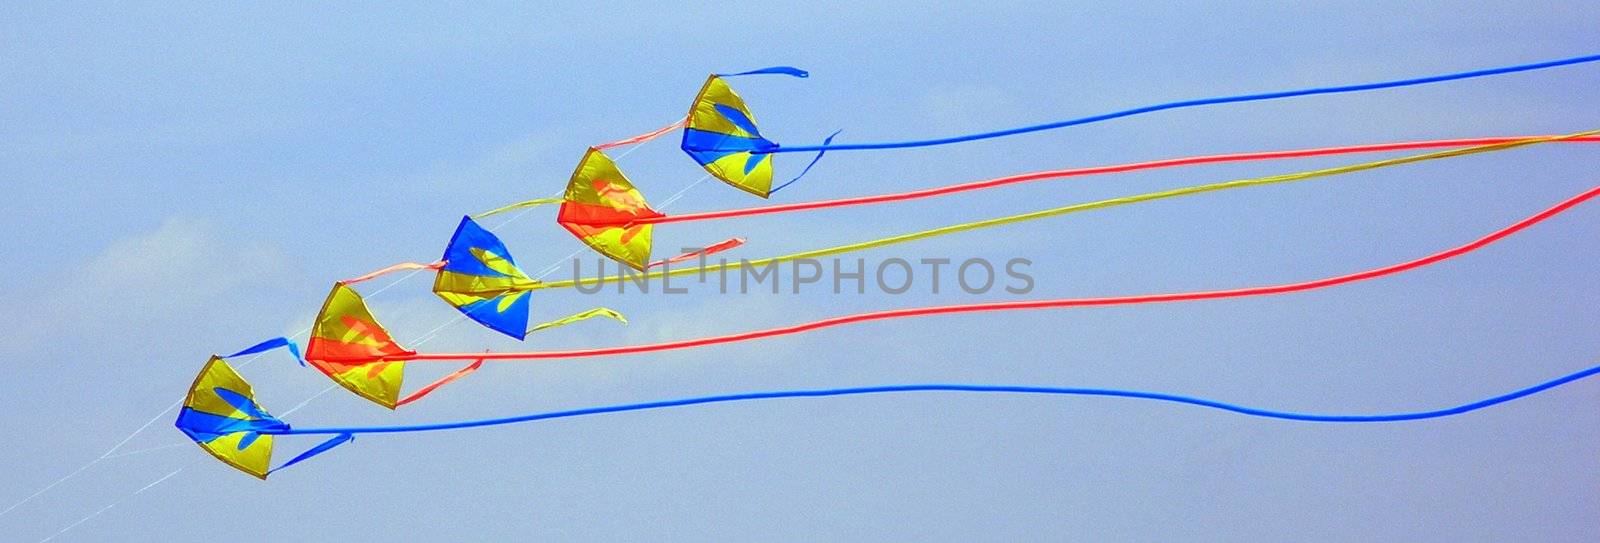 Flying Kites by quackersnaps